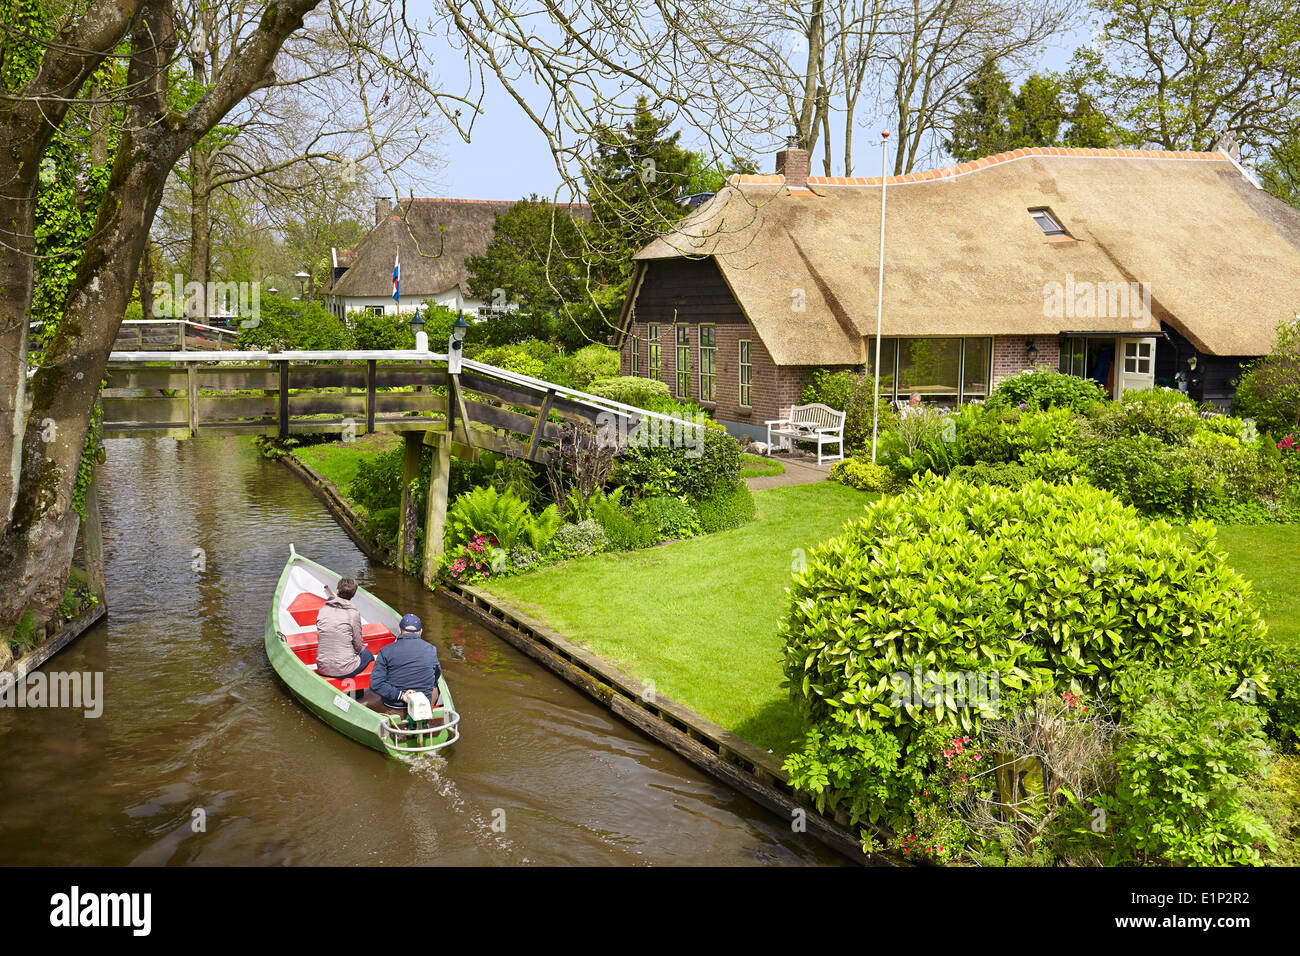 Giethoorn canal village - Holland Netherlands Stock Photo